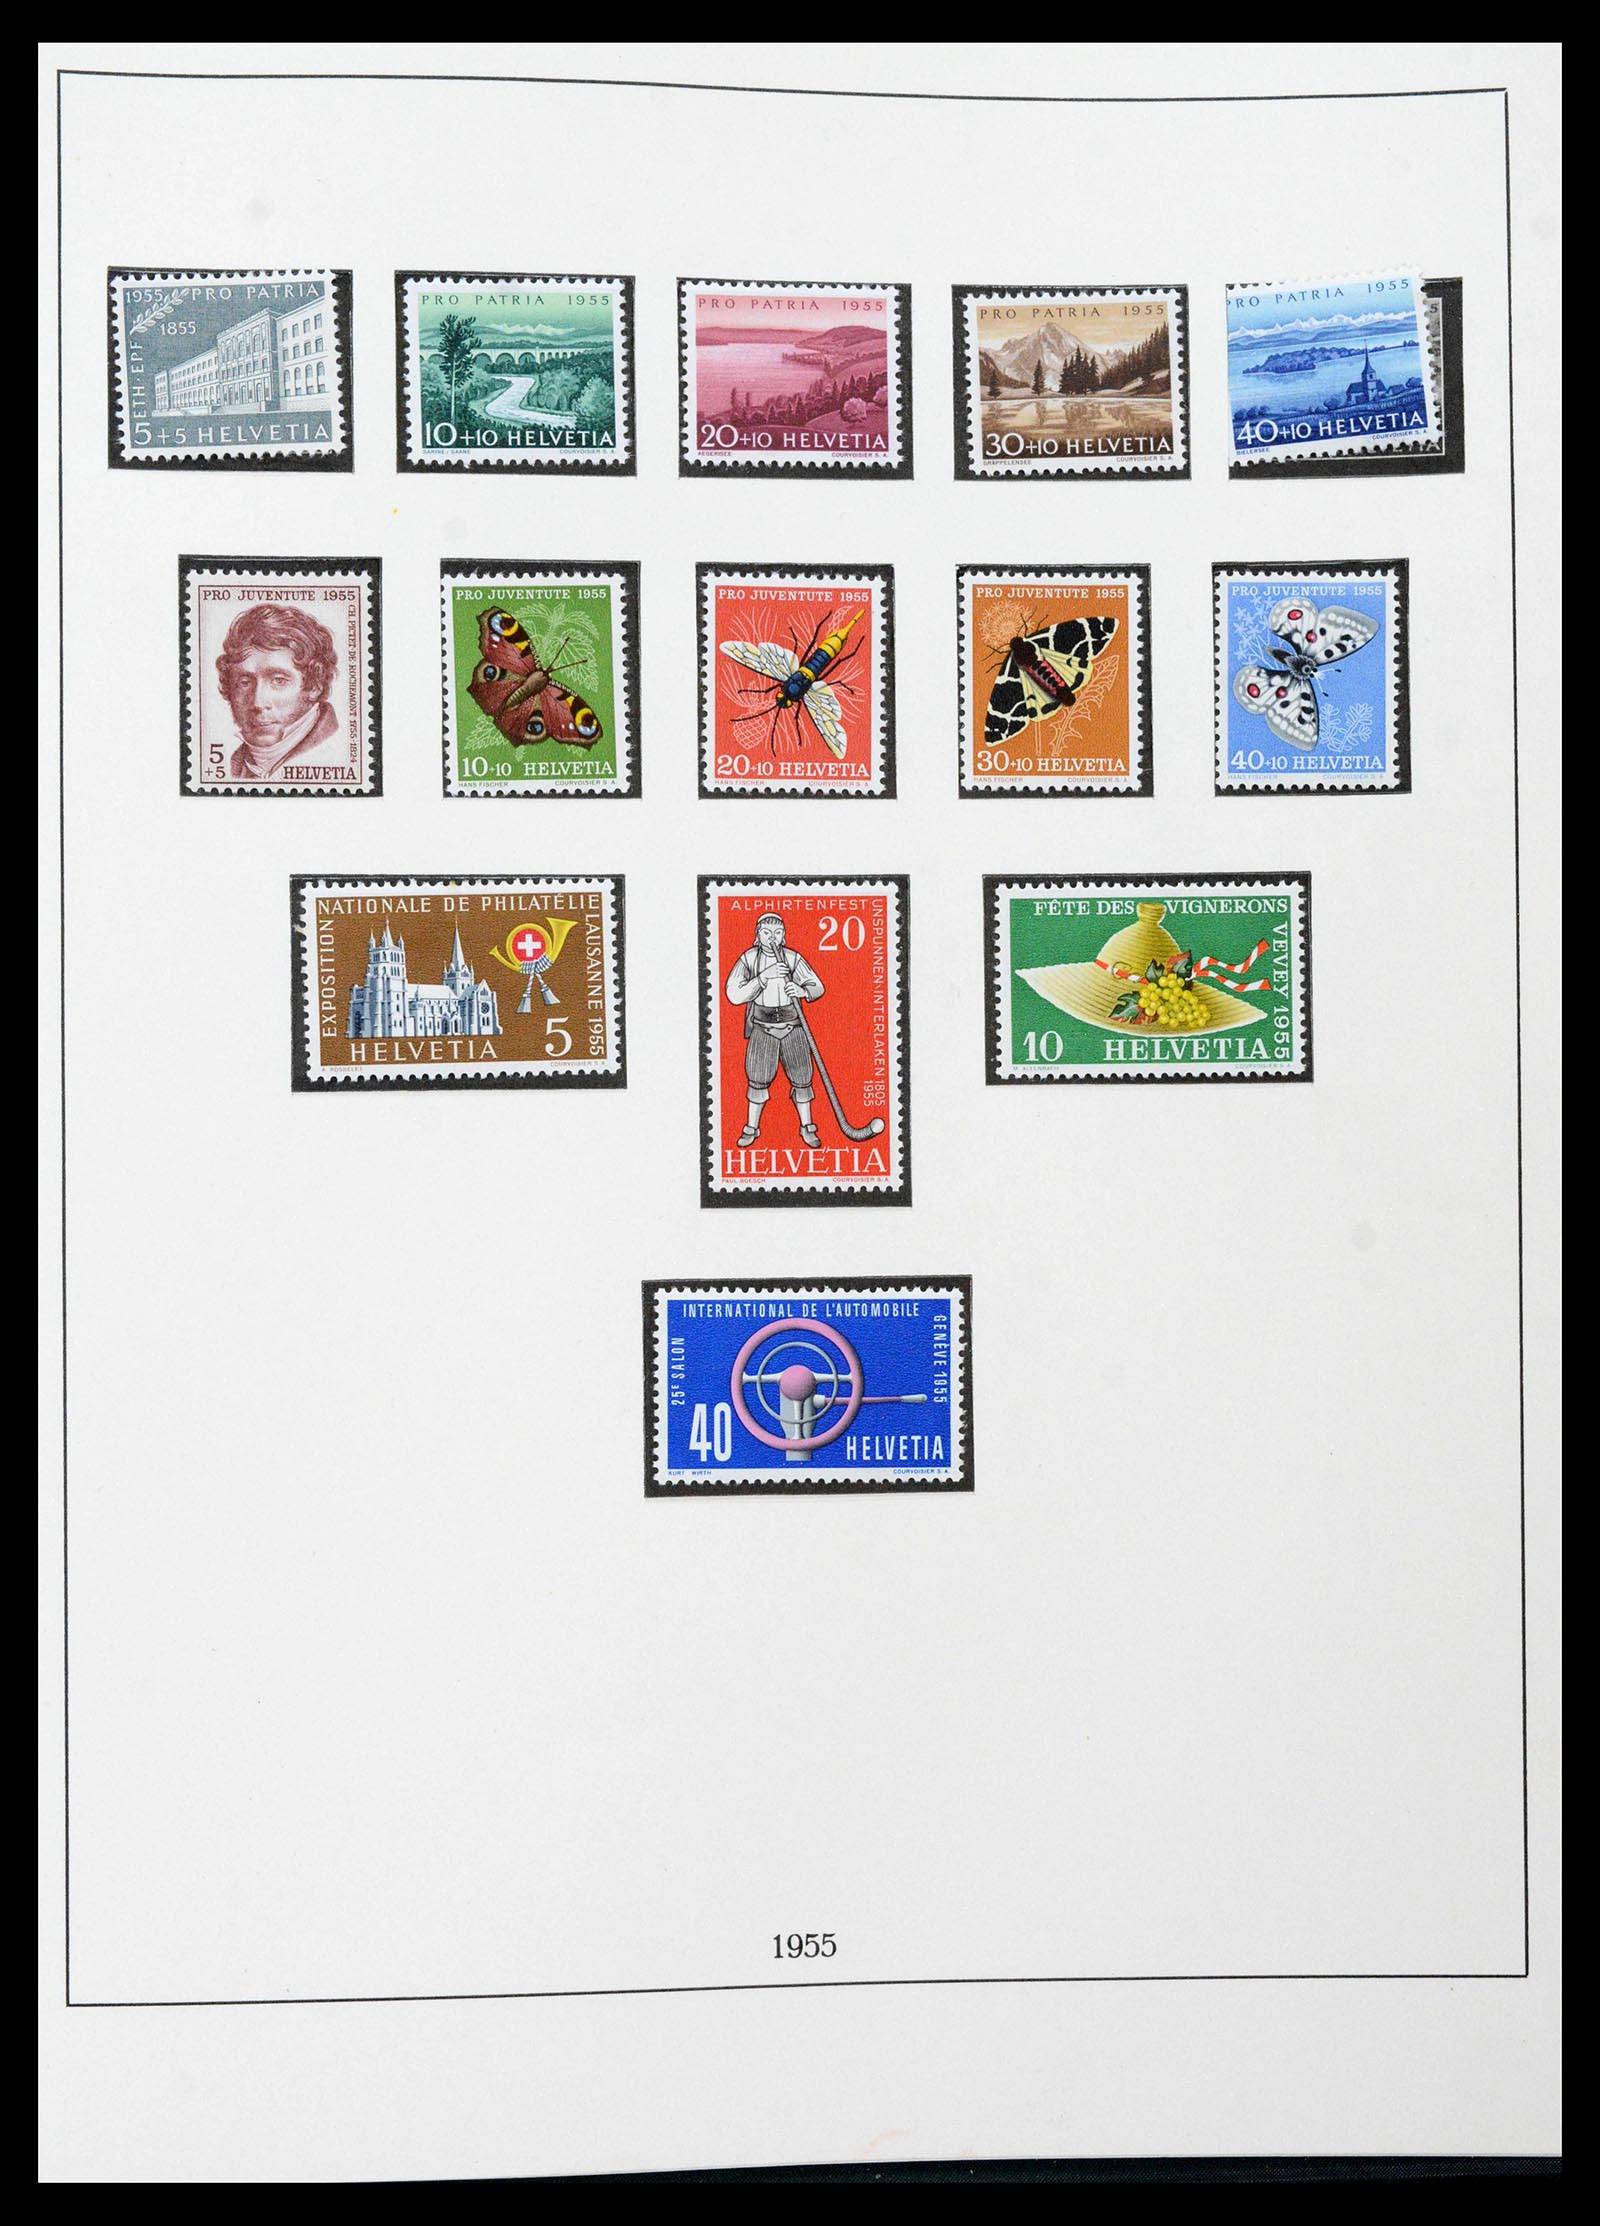 39235 0053 - Stamp collection 39235 Switzerland 1843-1960.